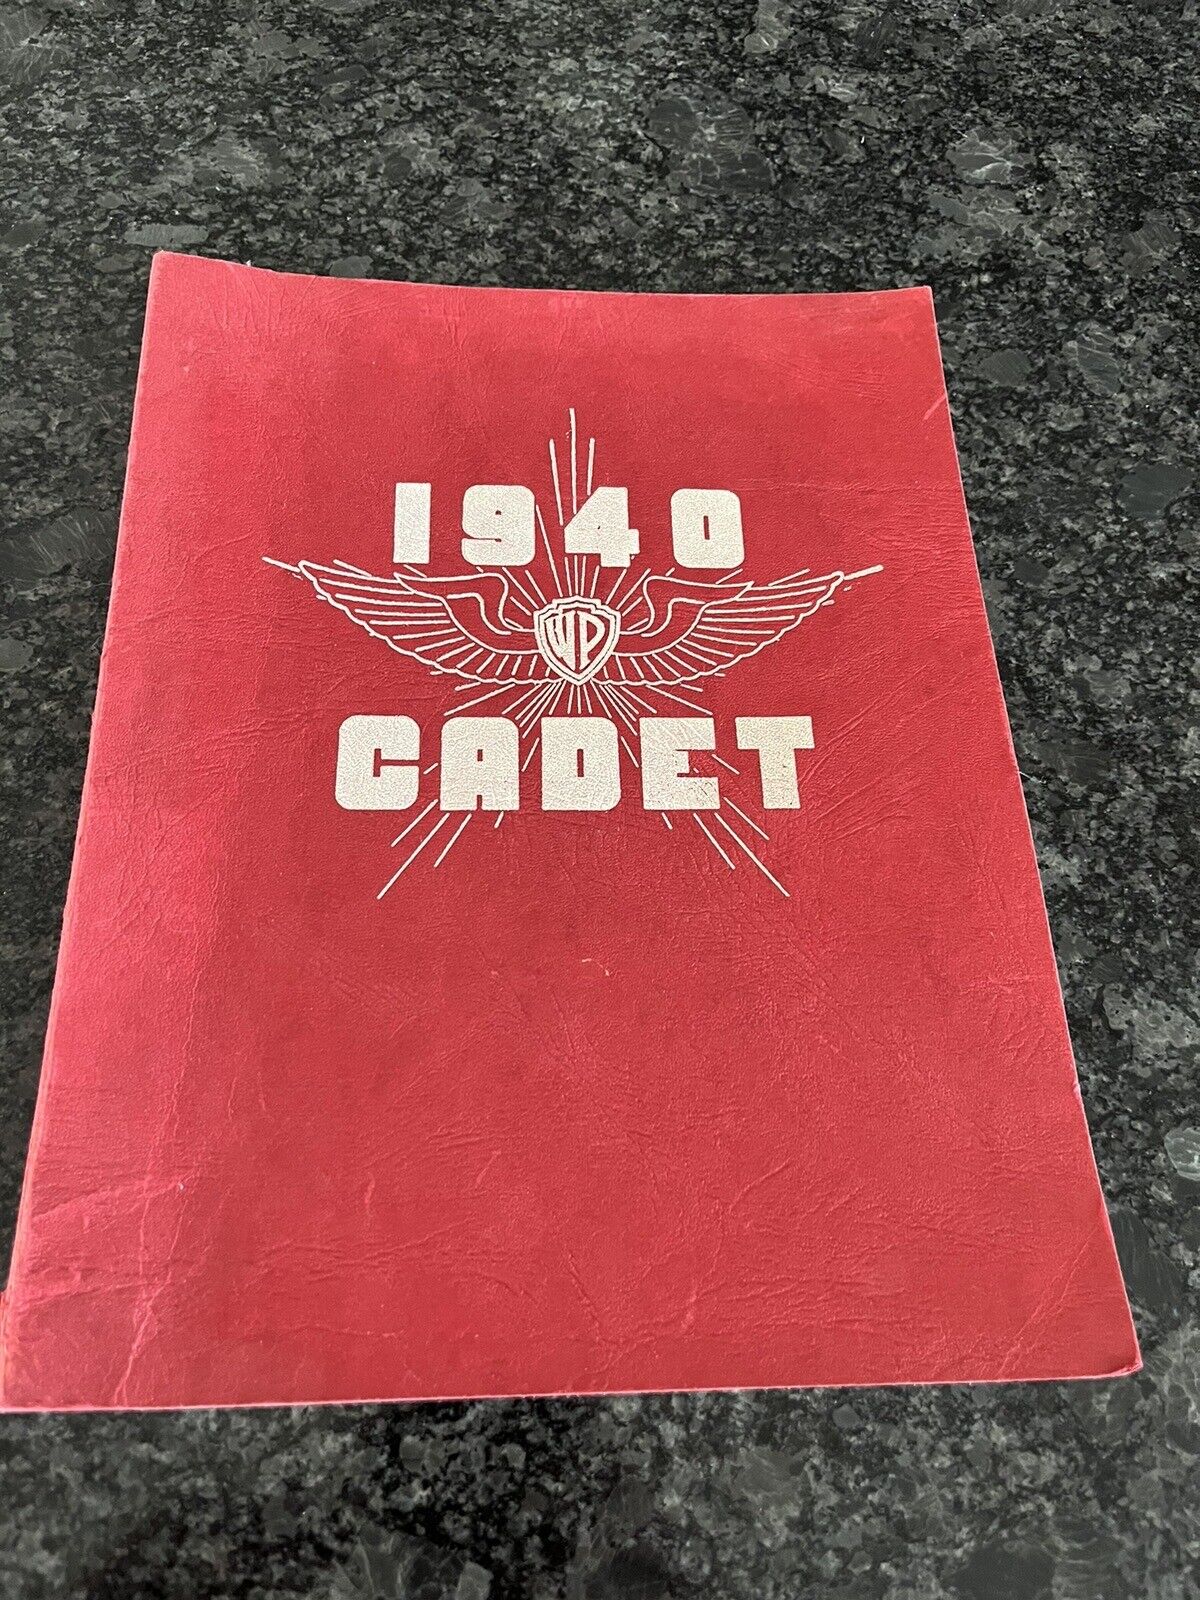 1940 west point nebraska High School cadet yearbook